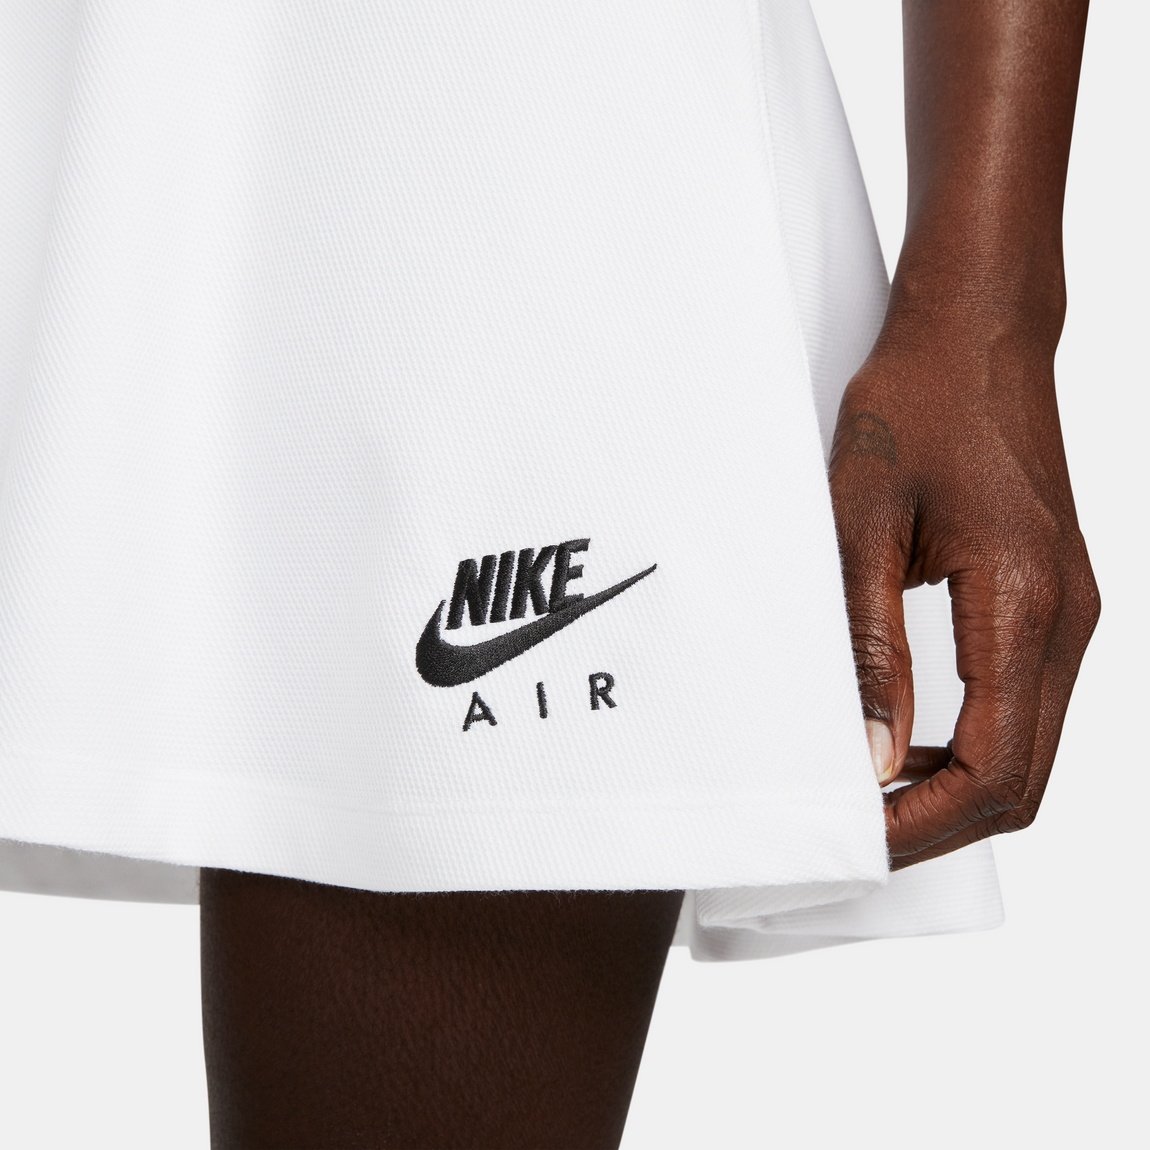 Buy Nike W NSW AIR PIQUE TOP BANDEAU - White/Black